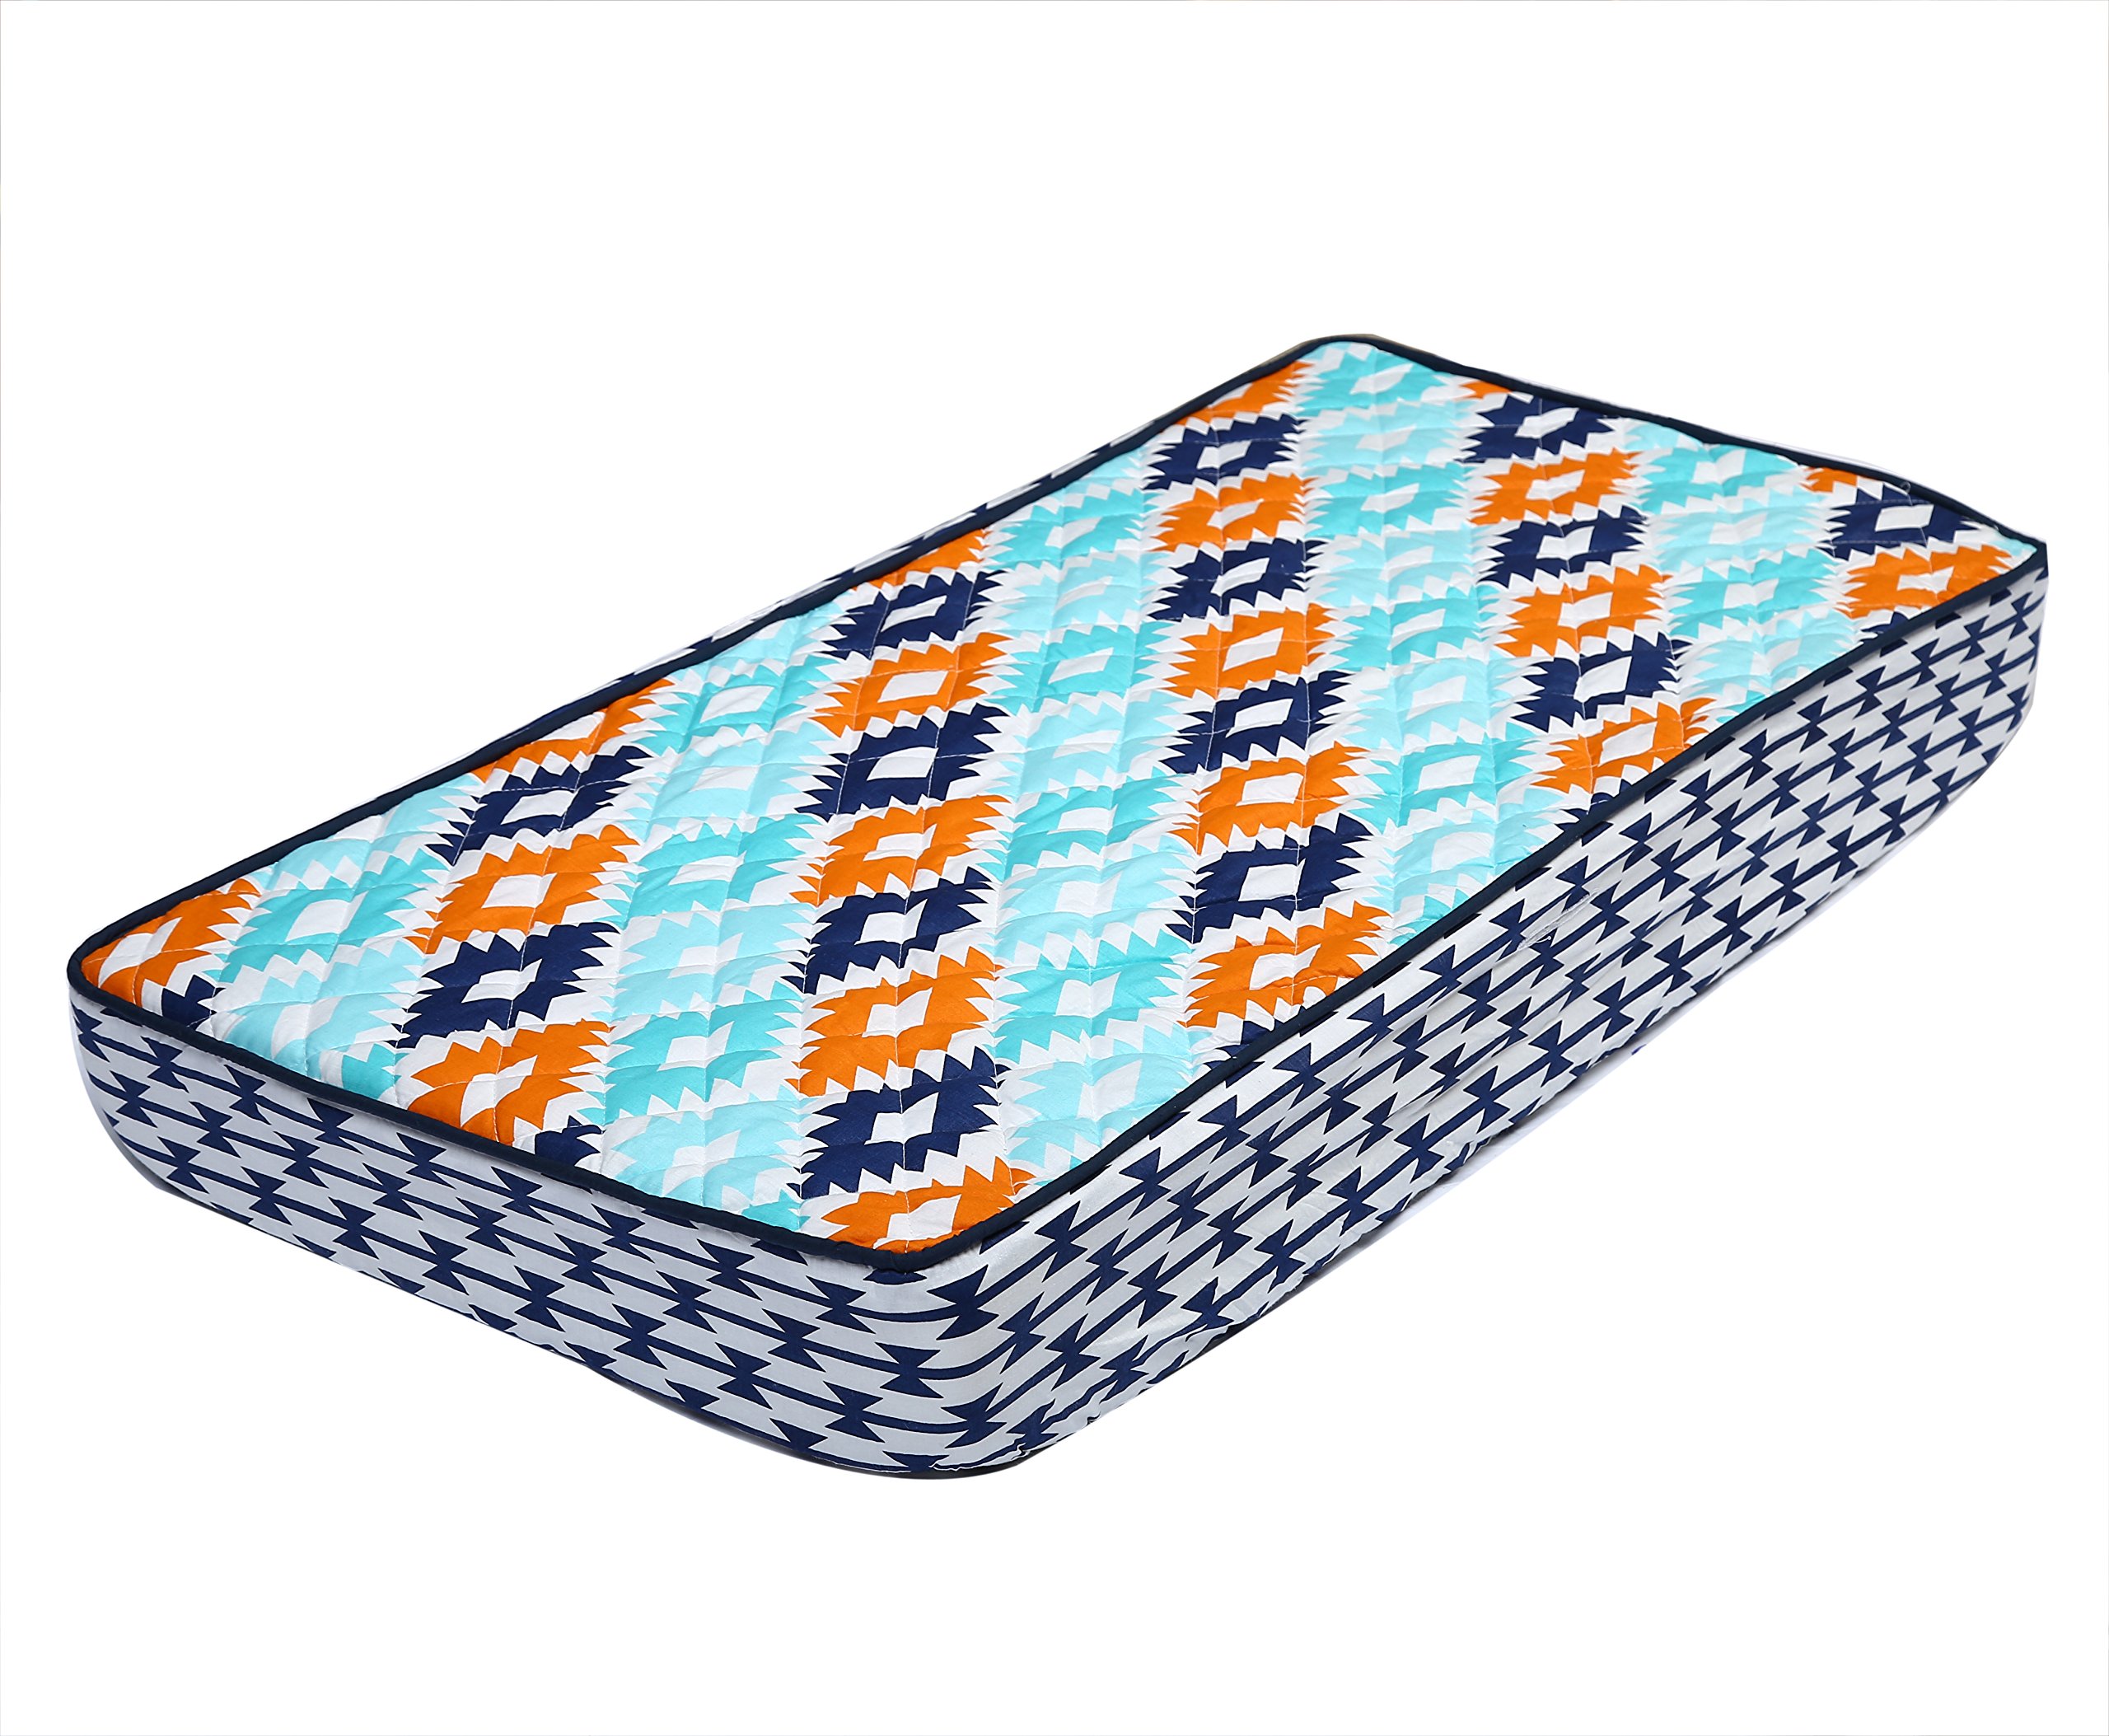 Bacati - Liam Aztec Kilim Aqua/Orange/Navy Quilted Changing Pad Cover